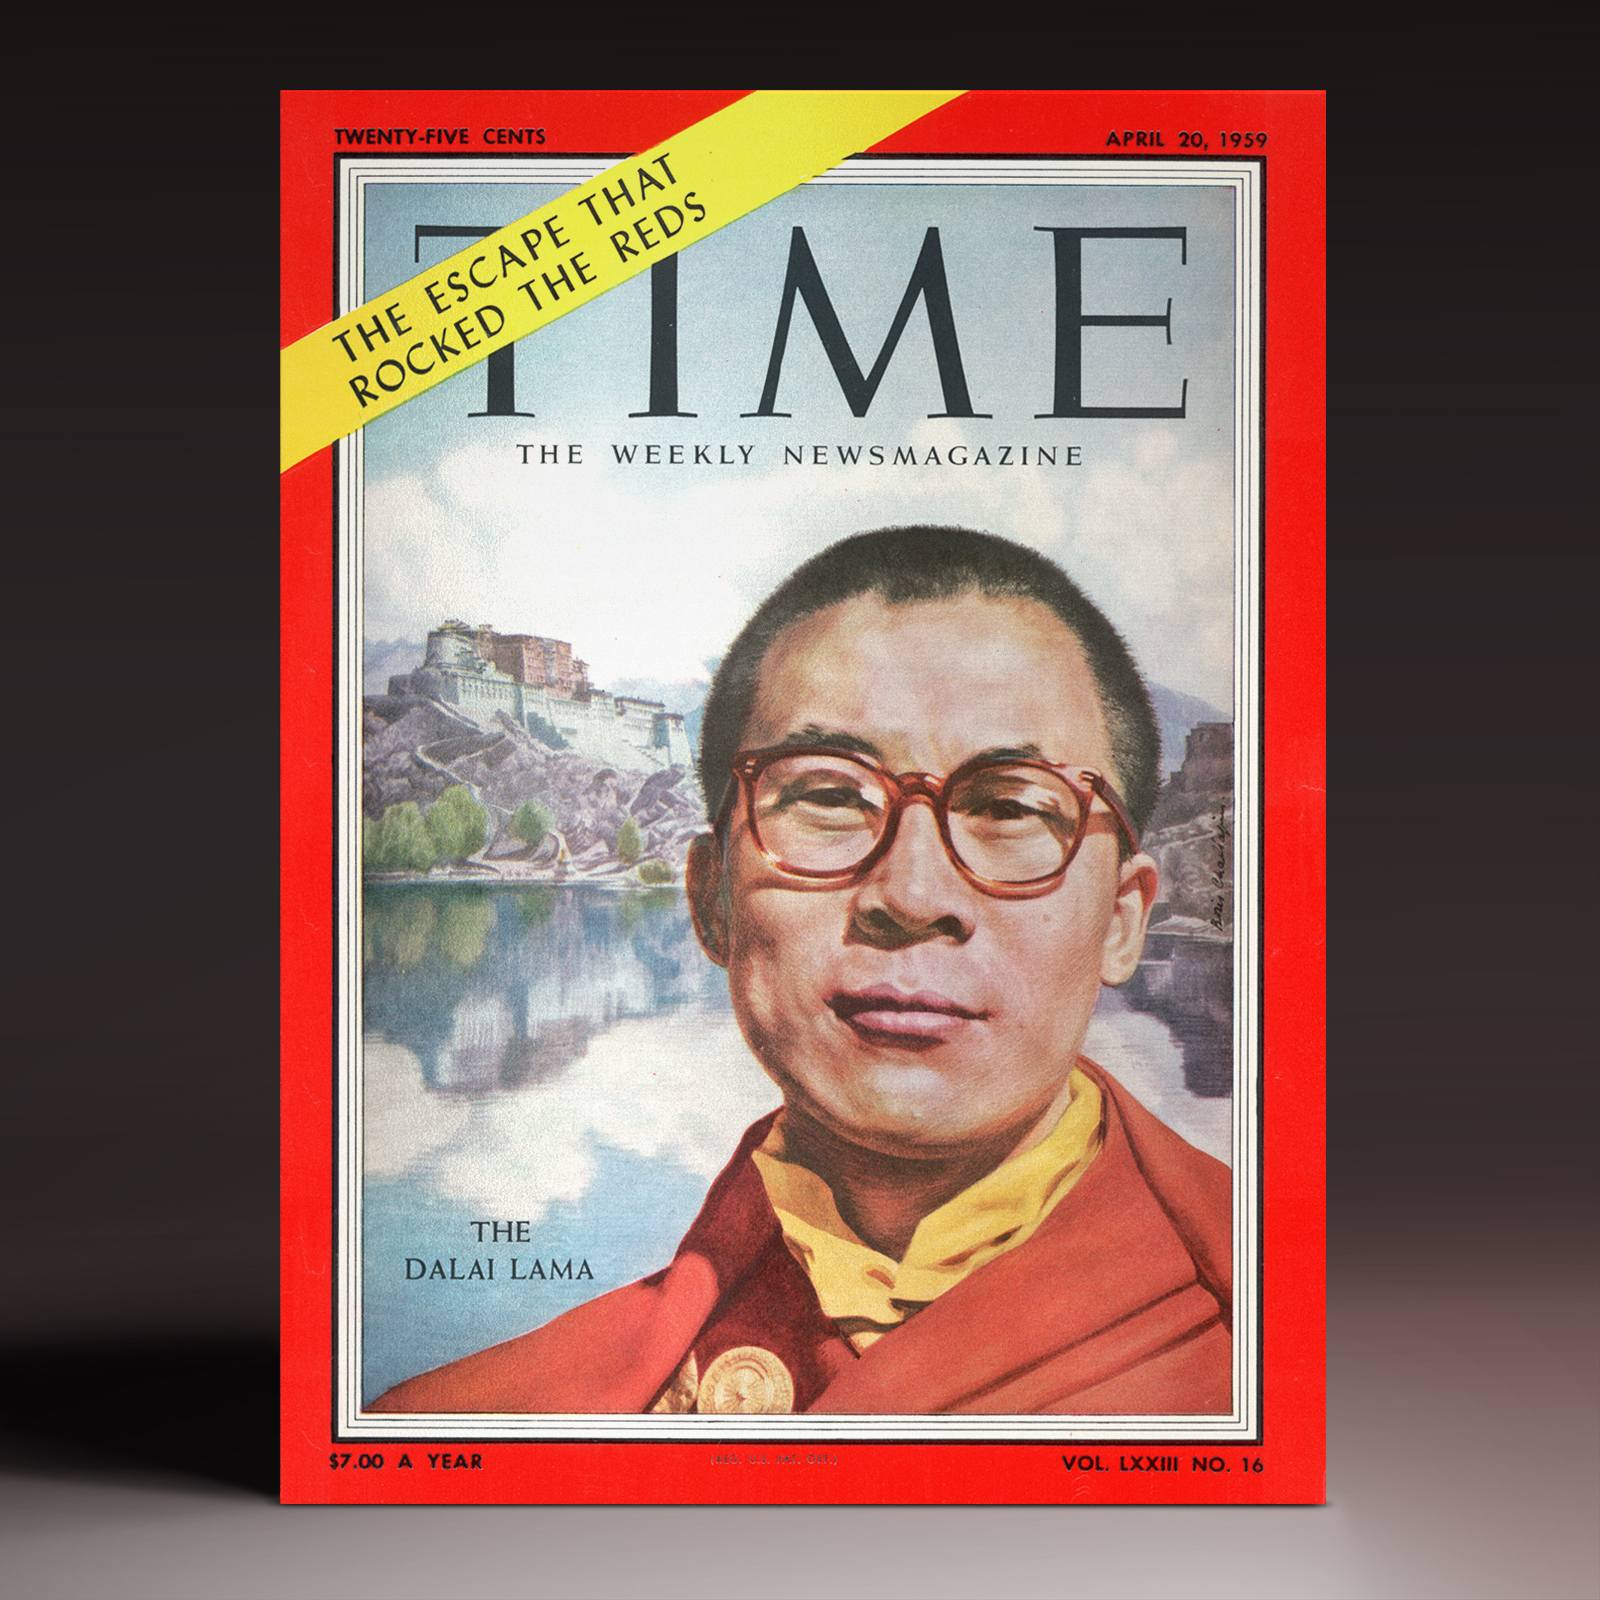 Dalai Lama TIME Cover 1959